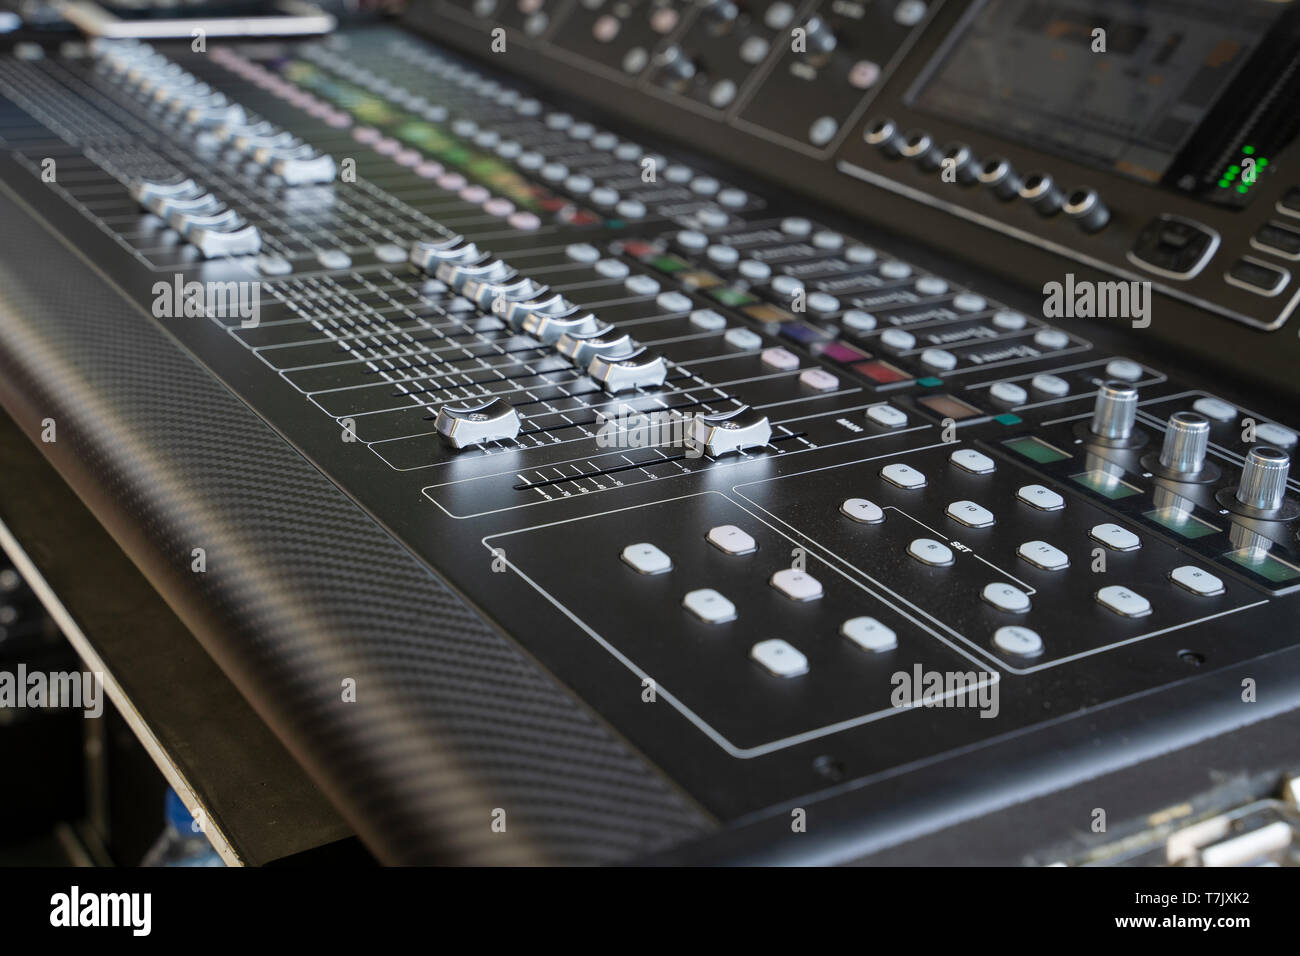 Sound music mixer control panel - Image Banque D'Images